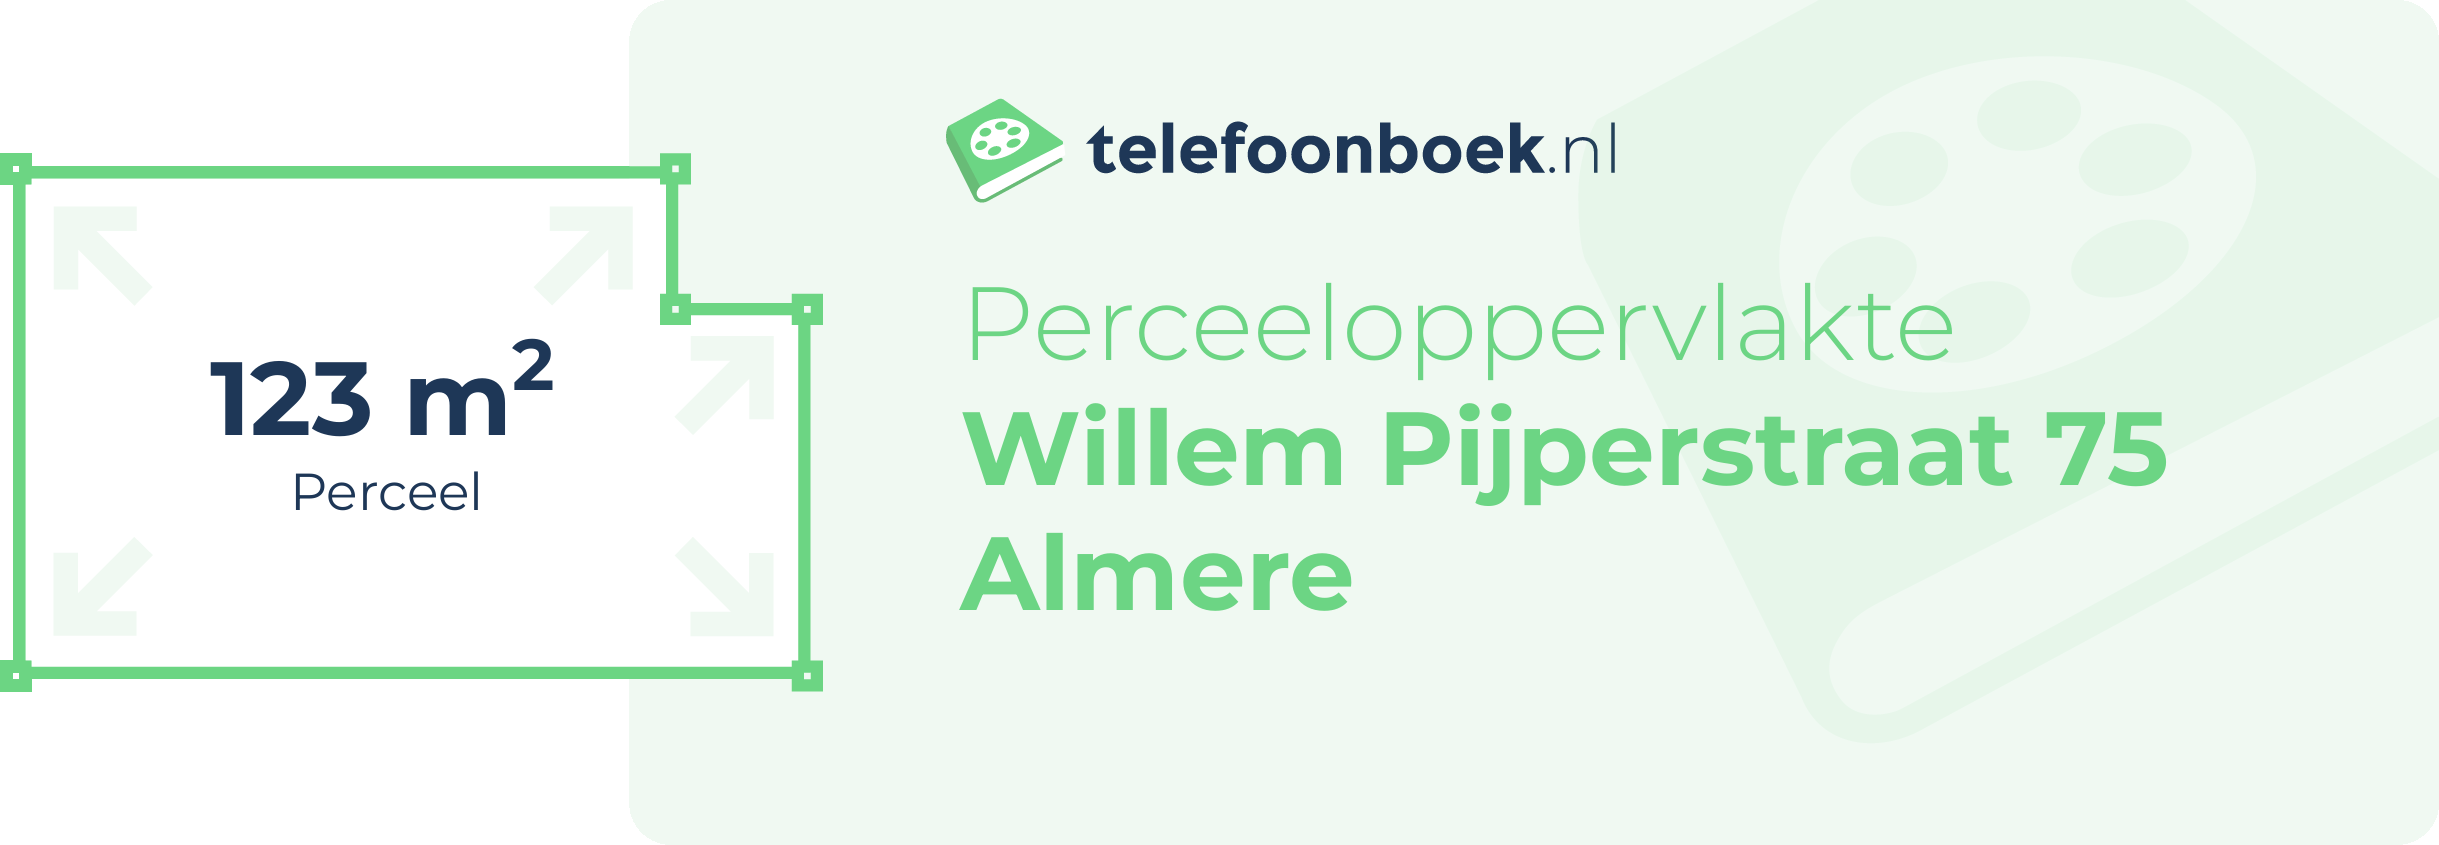 Perceeloppervlakte Willem Pijperstraat 75 Almere